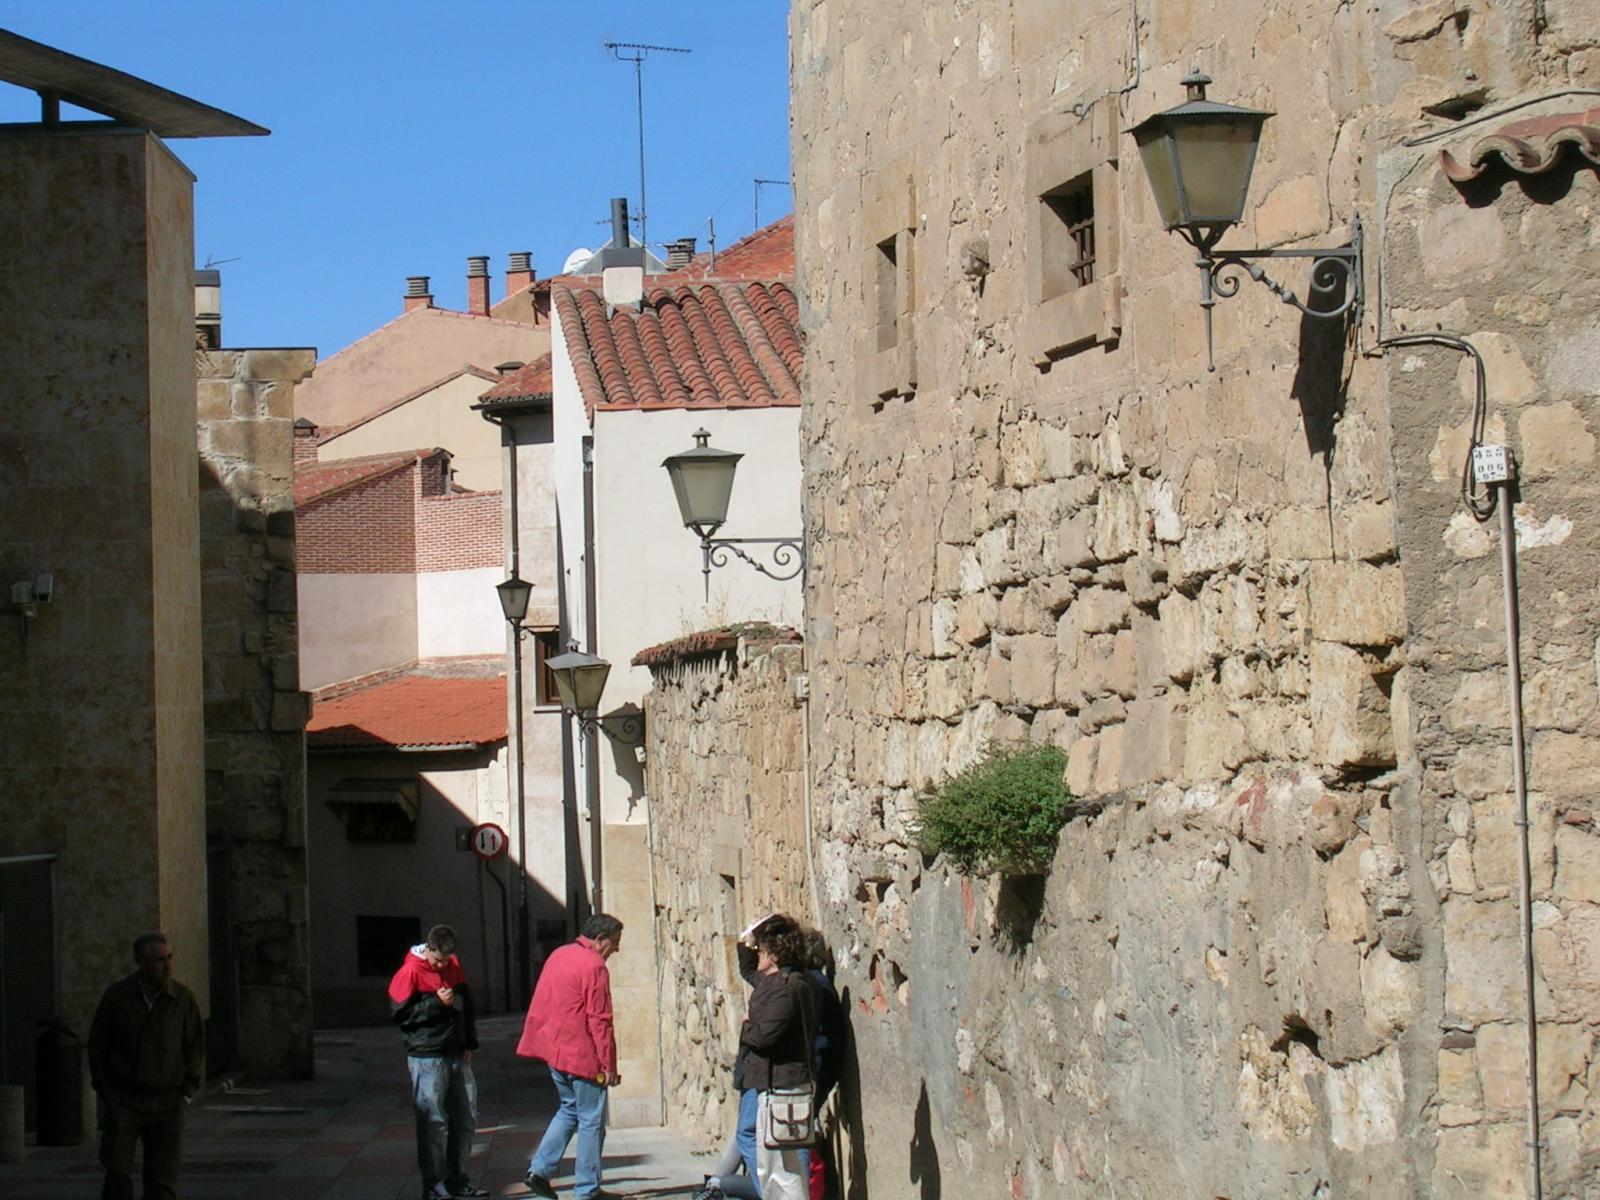 г. Саламанка, обычна улица старого города